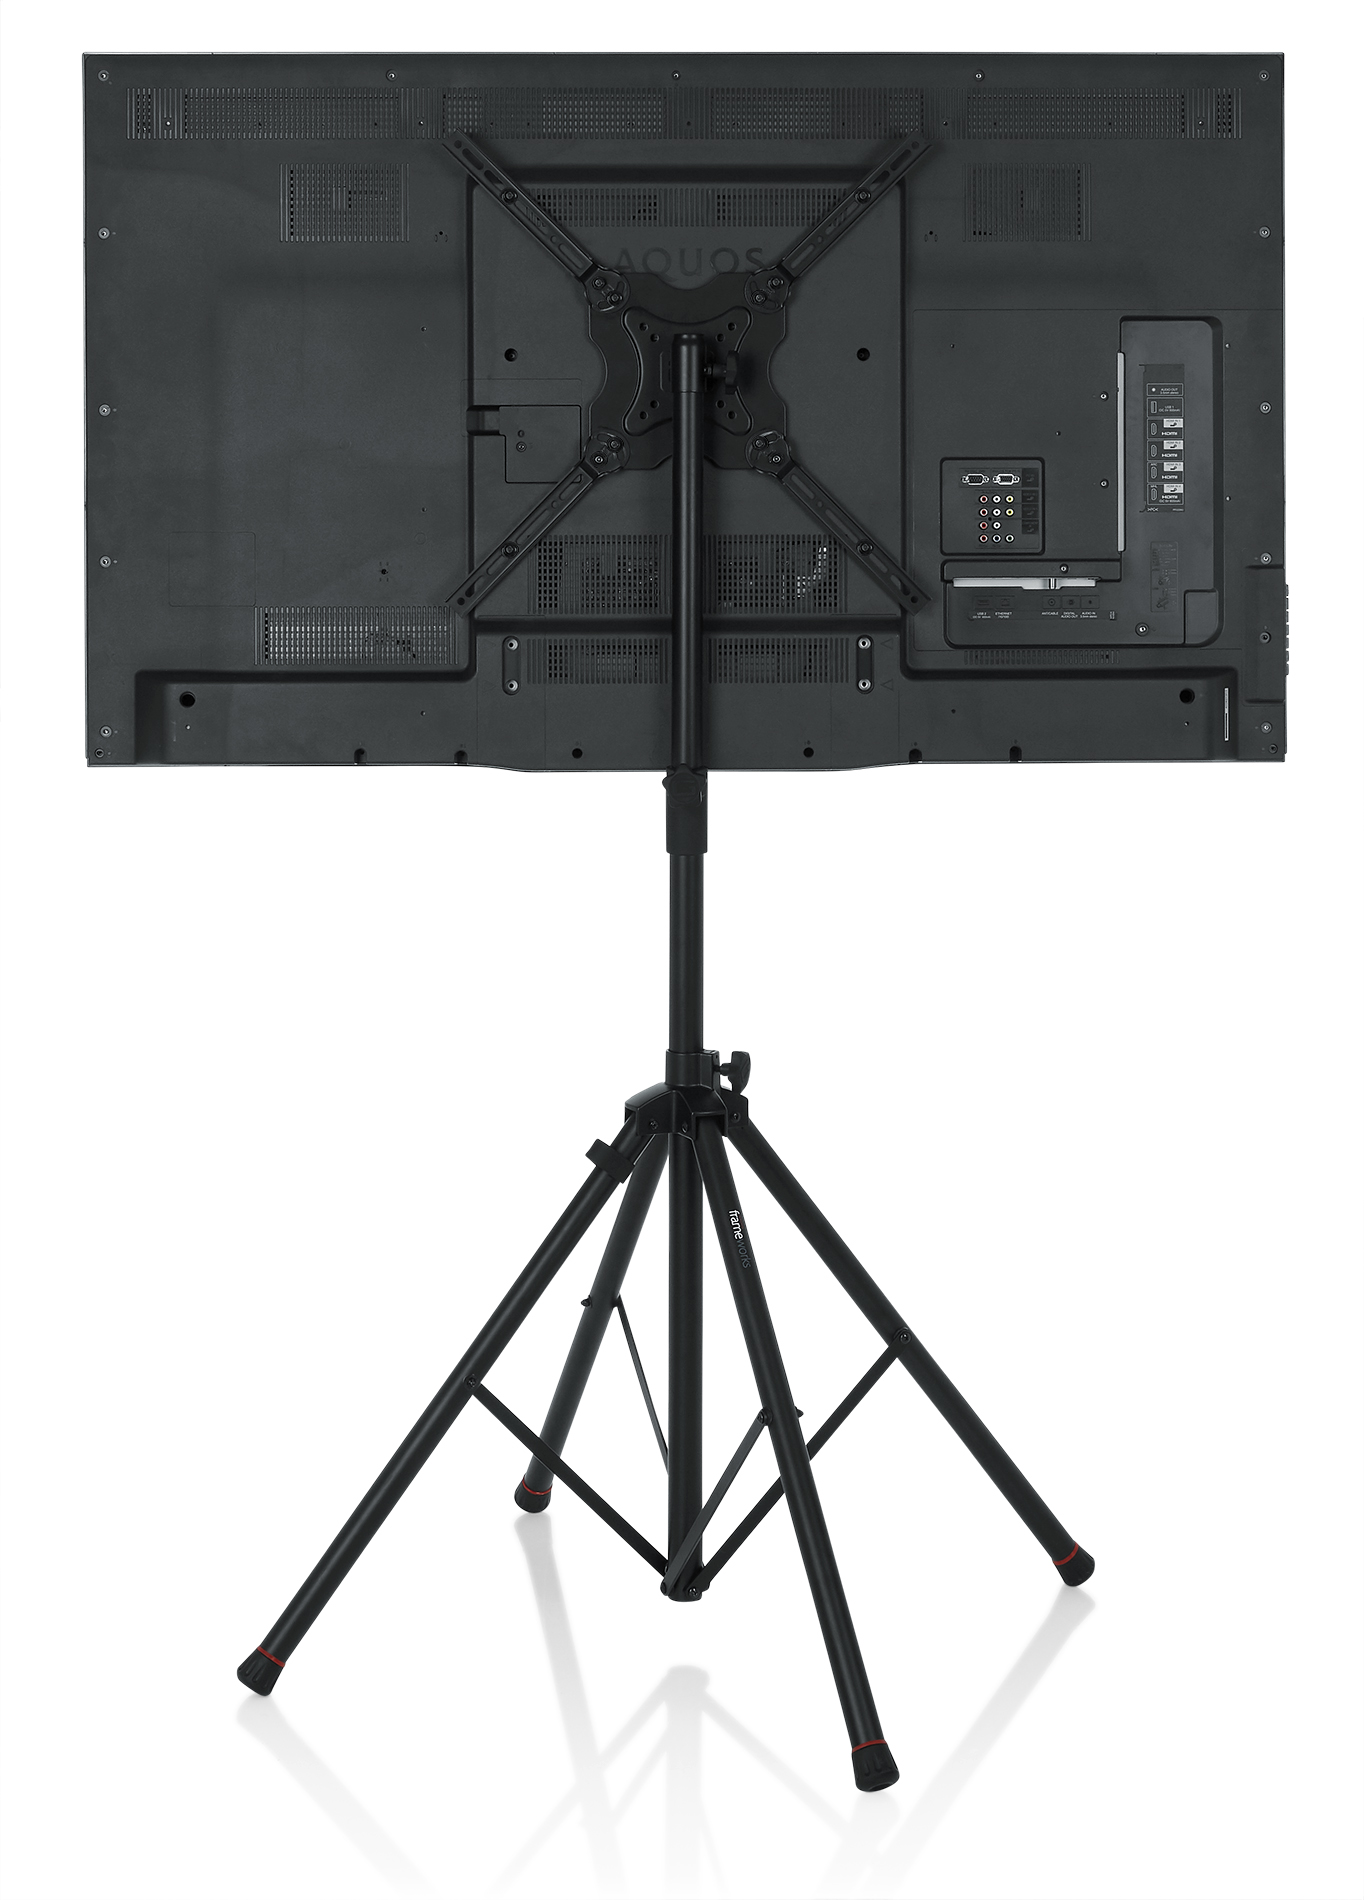 Piston-driven AV stand for displays up to 65 inch-GFW-AV-LCD-25